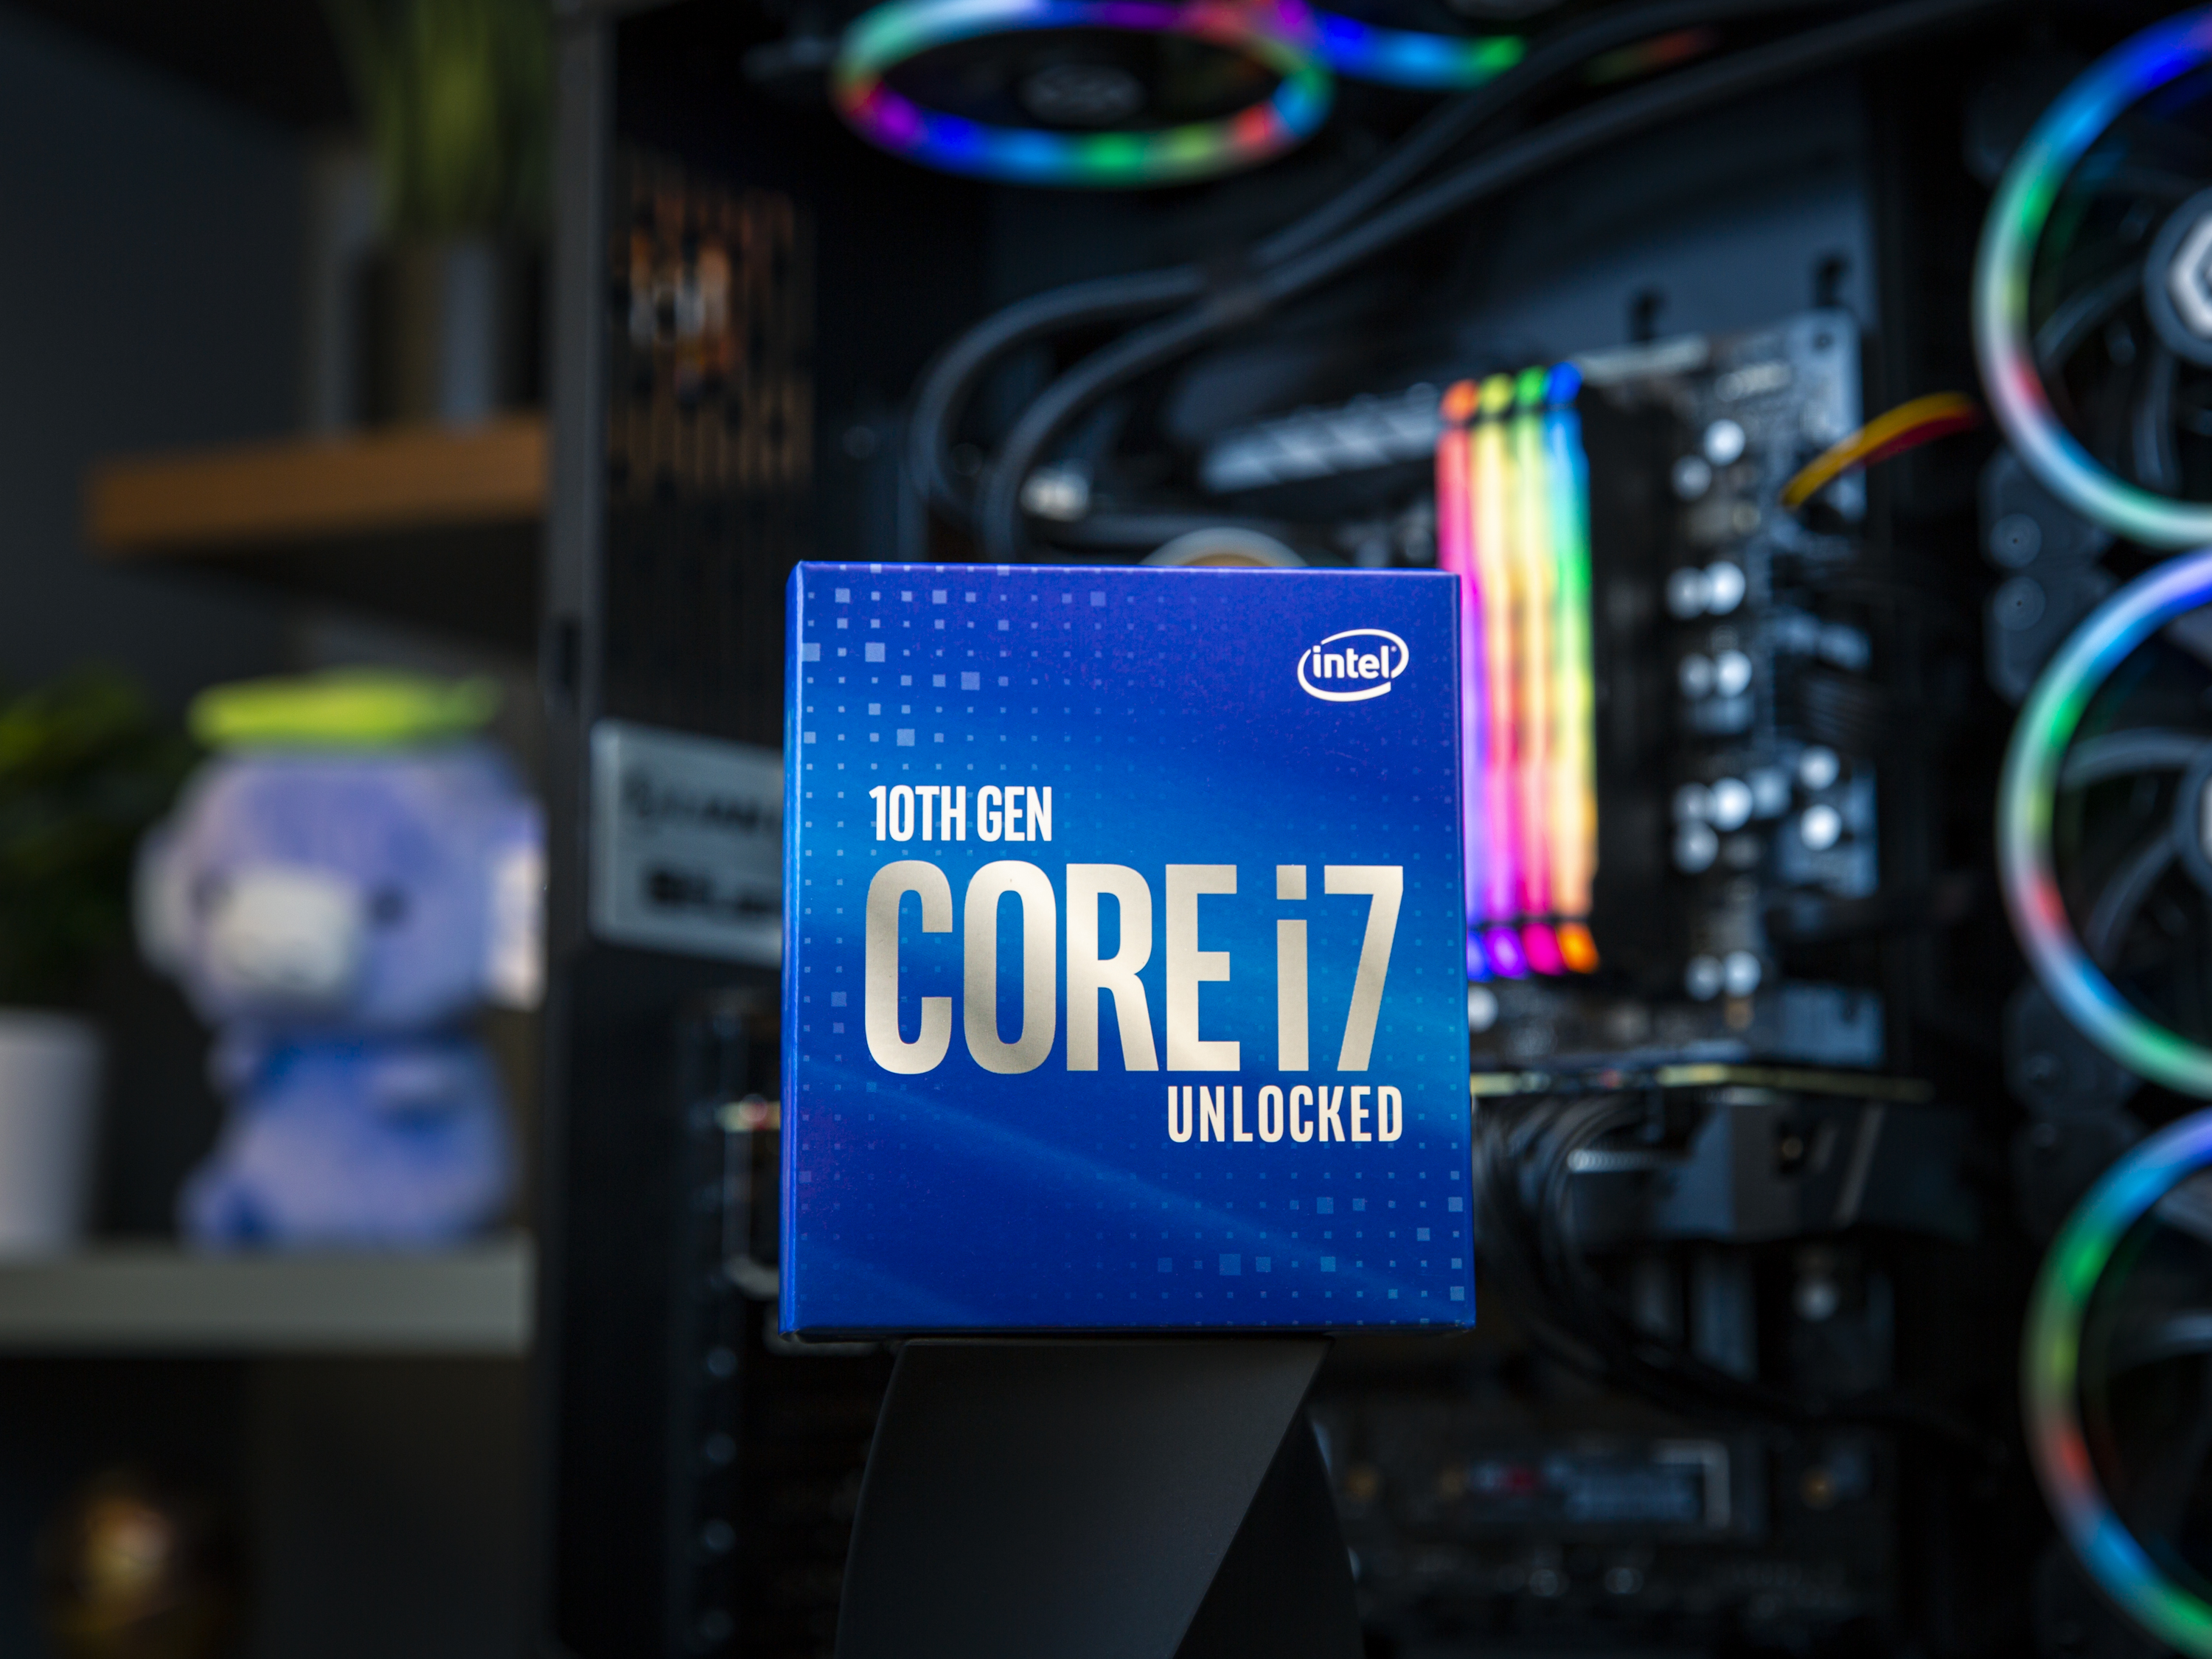 Intel Core i7-10700K Gaming Benchmarks - Intel Core i7-10700K 